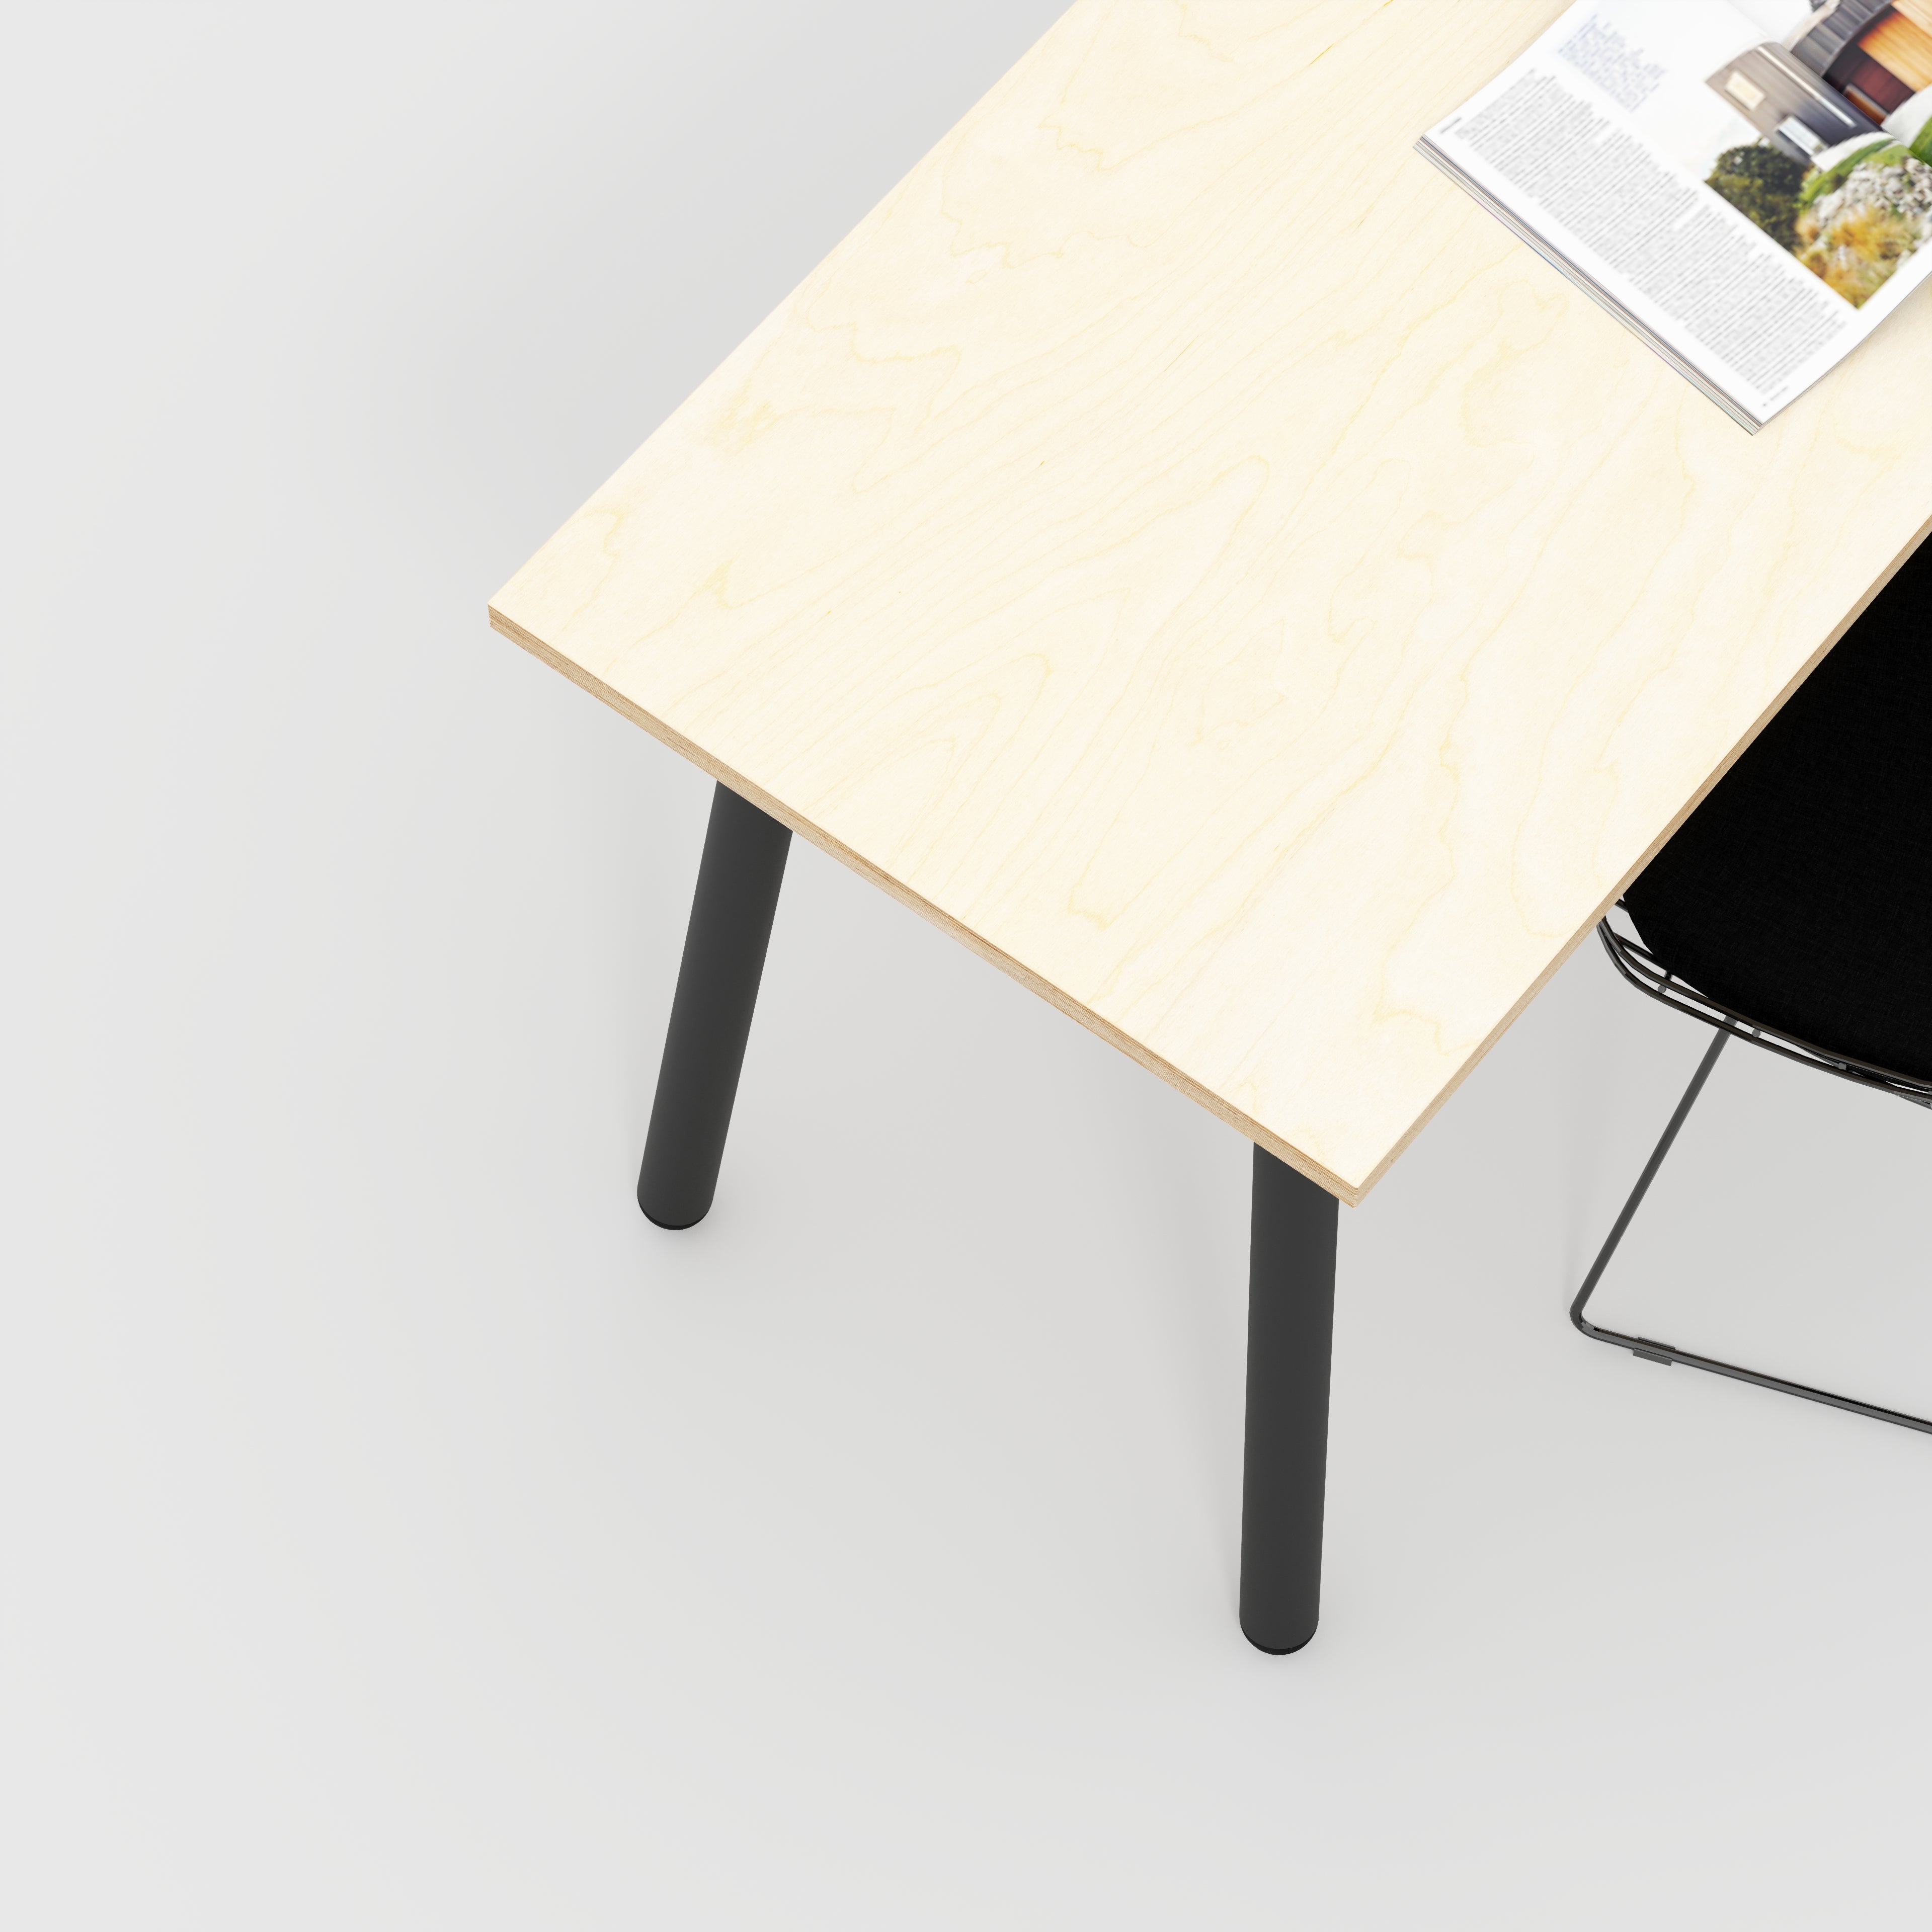 Custom Plywood Desk with Round Single Pin Legs